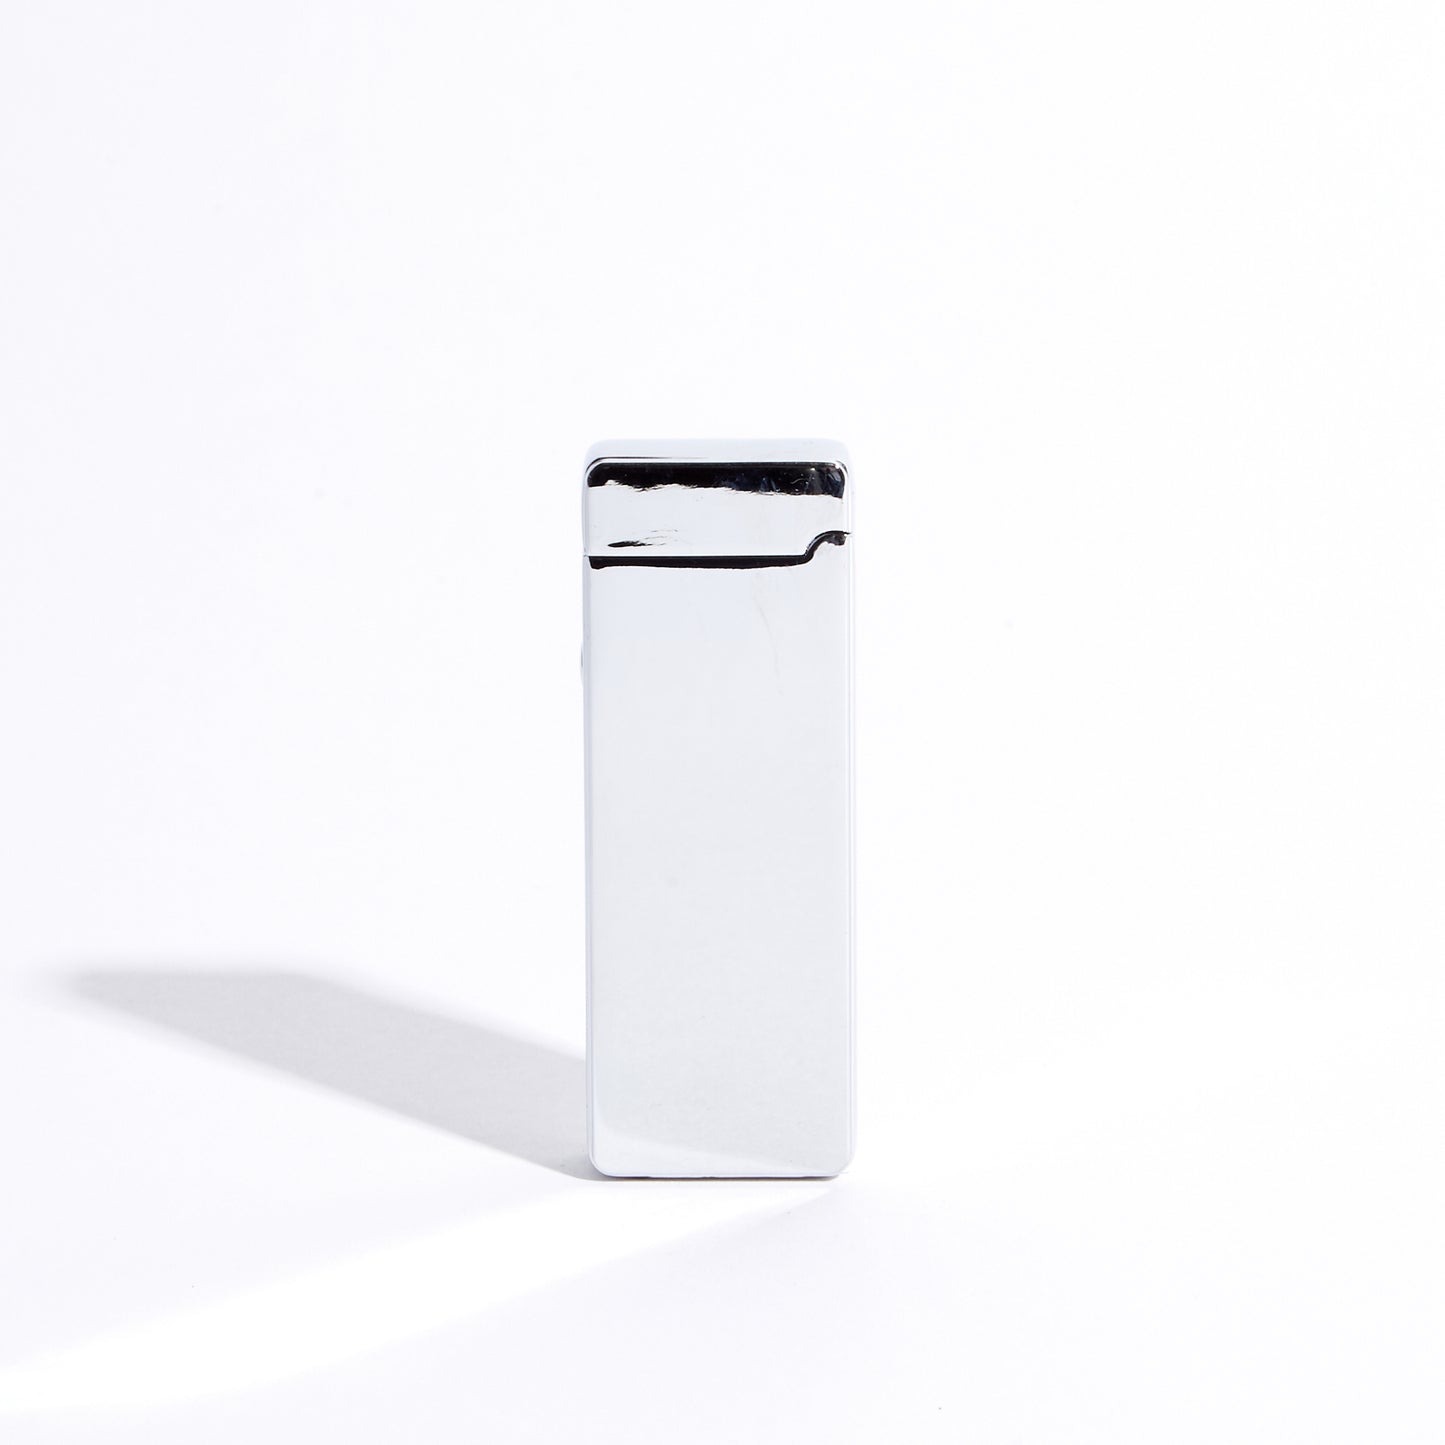 Pocket Electric Arc Lighter - Silver